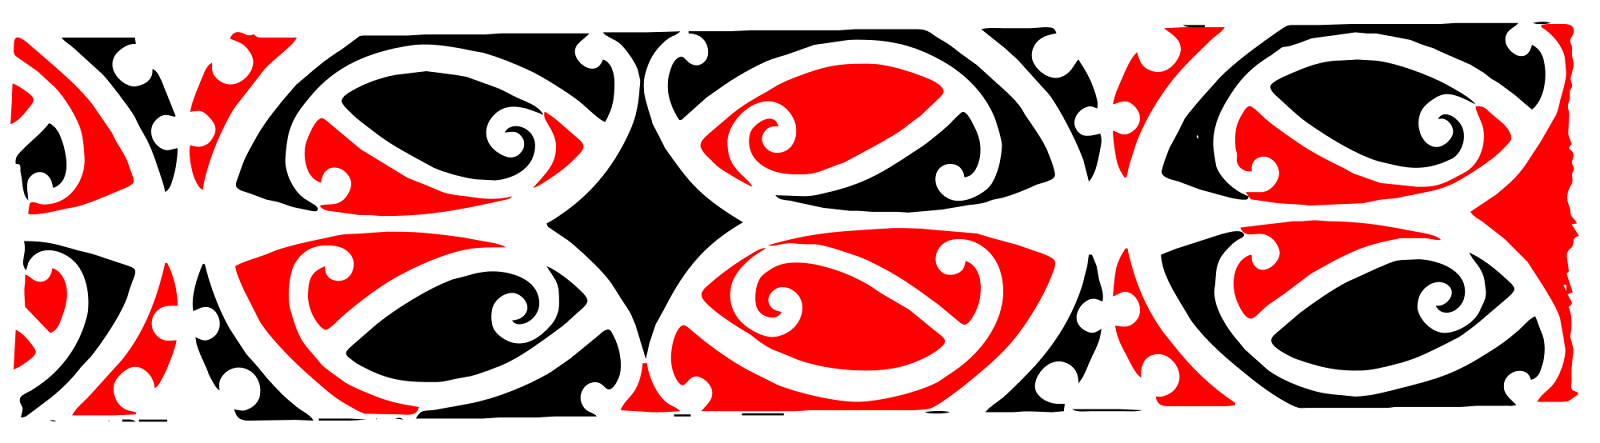 https://upload.wikimedia.org/wikipedia/commons/thumb/9/99/Maori-rafter15.svg/2000px-Maori-rafter15.svg.png